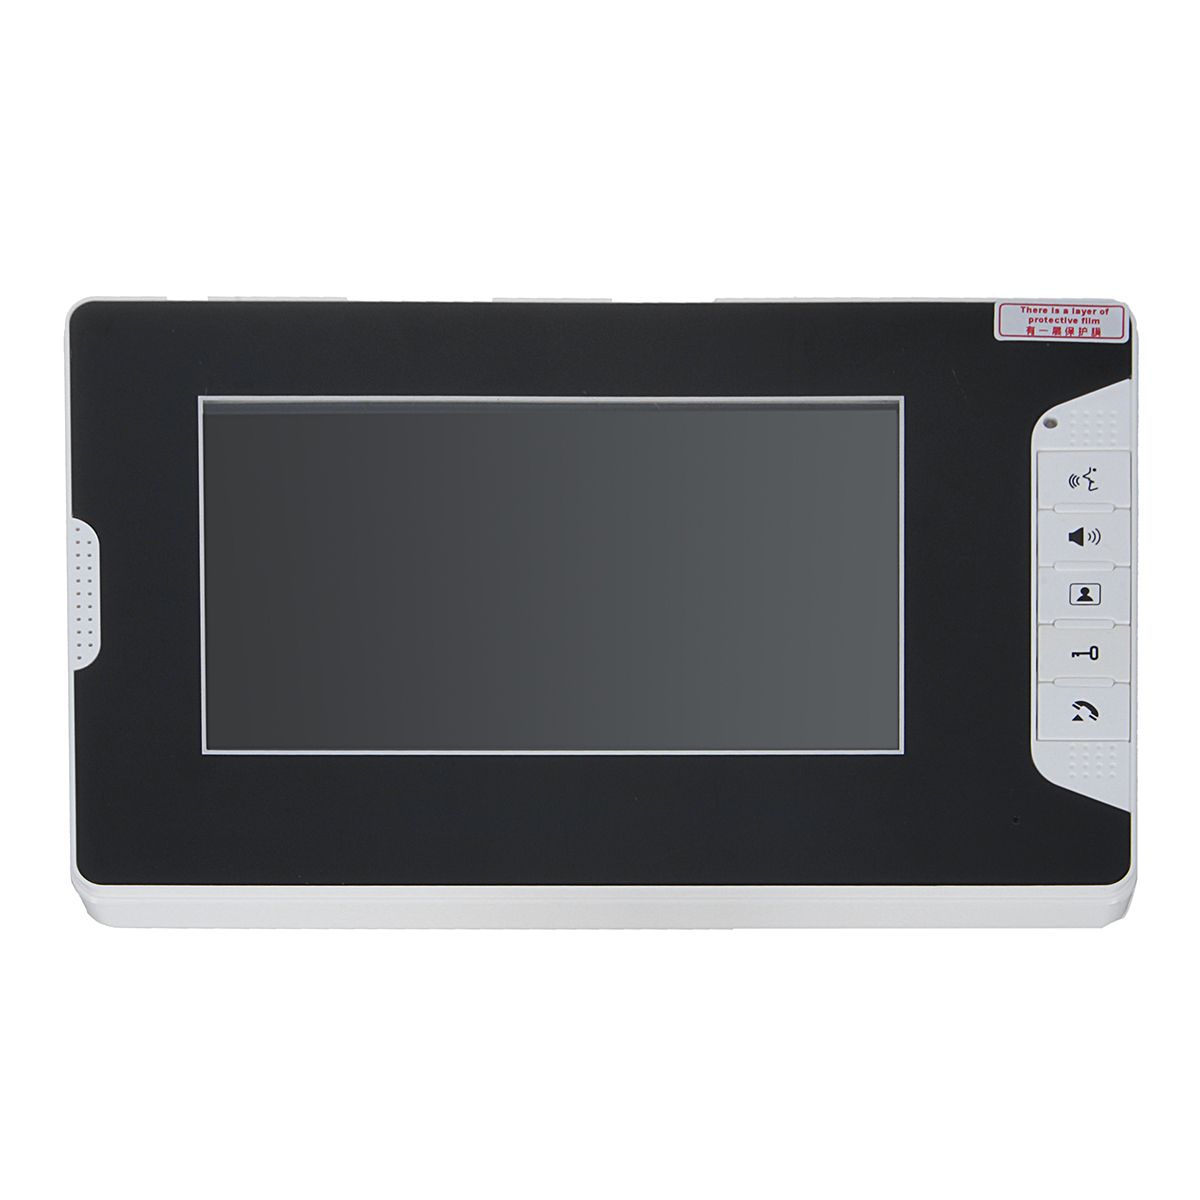 7inch-LCD-Video-Doorbell-Intercom-IR-Camera-Monitor-Night-Vision-Home-Security-1305844